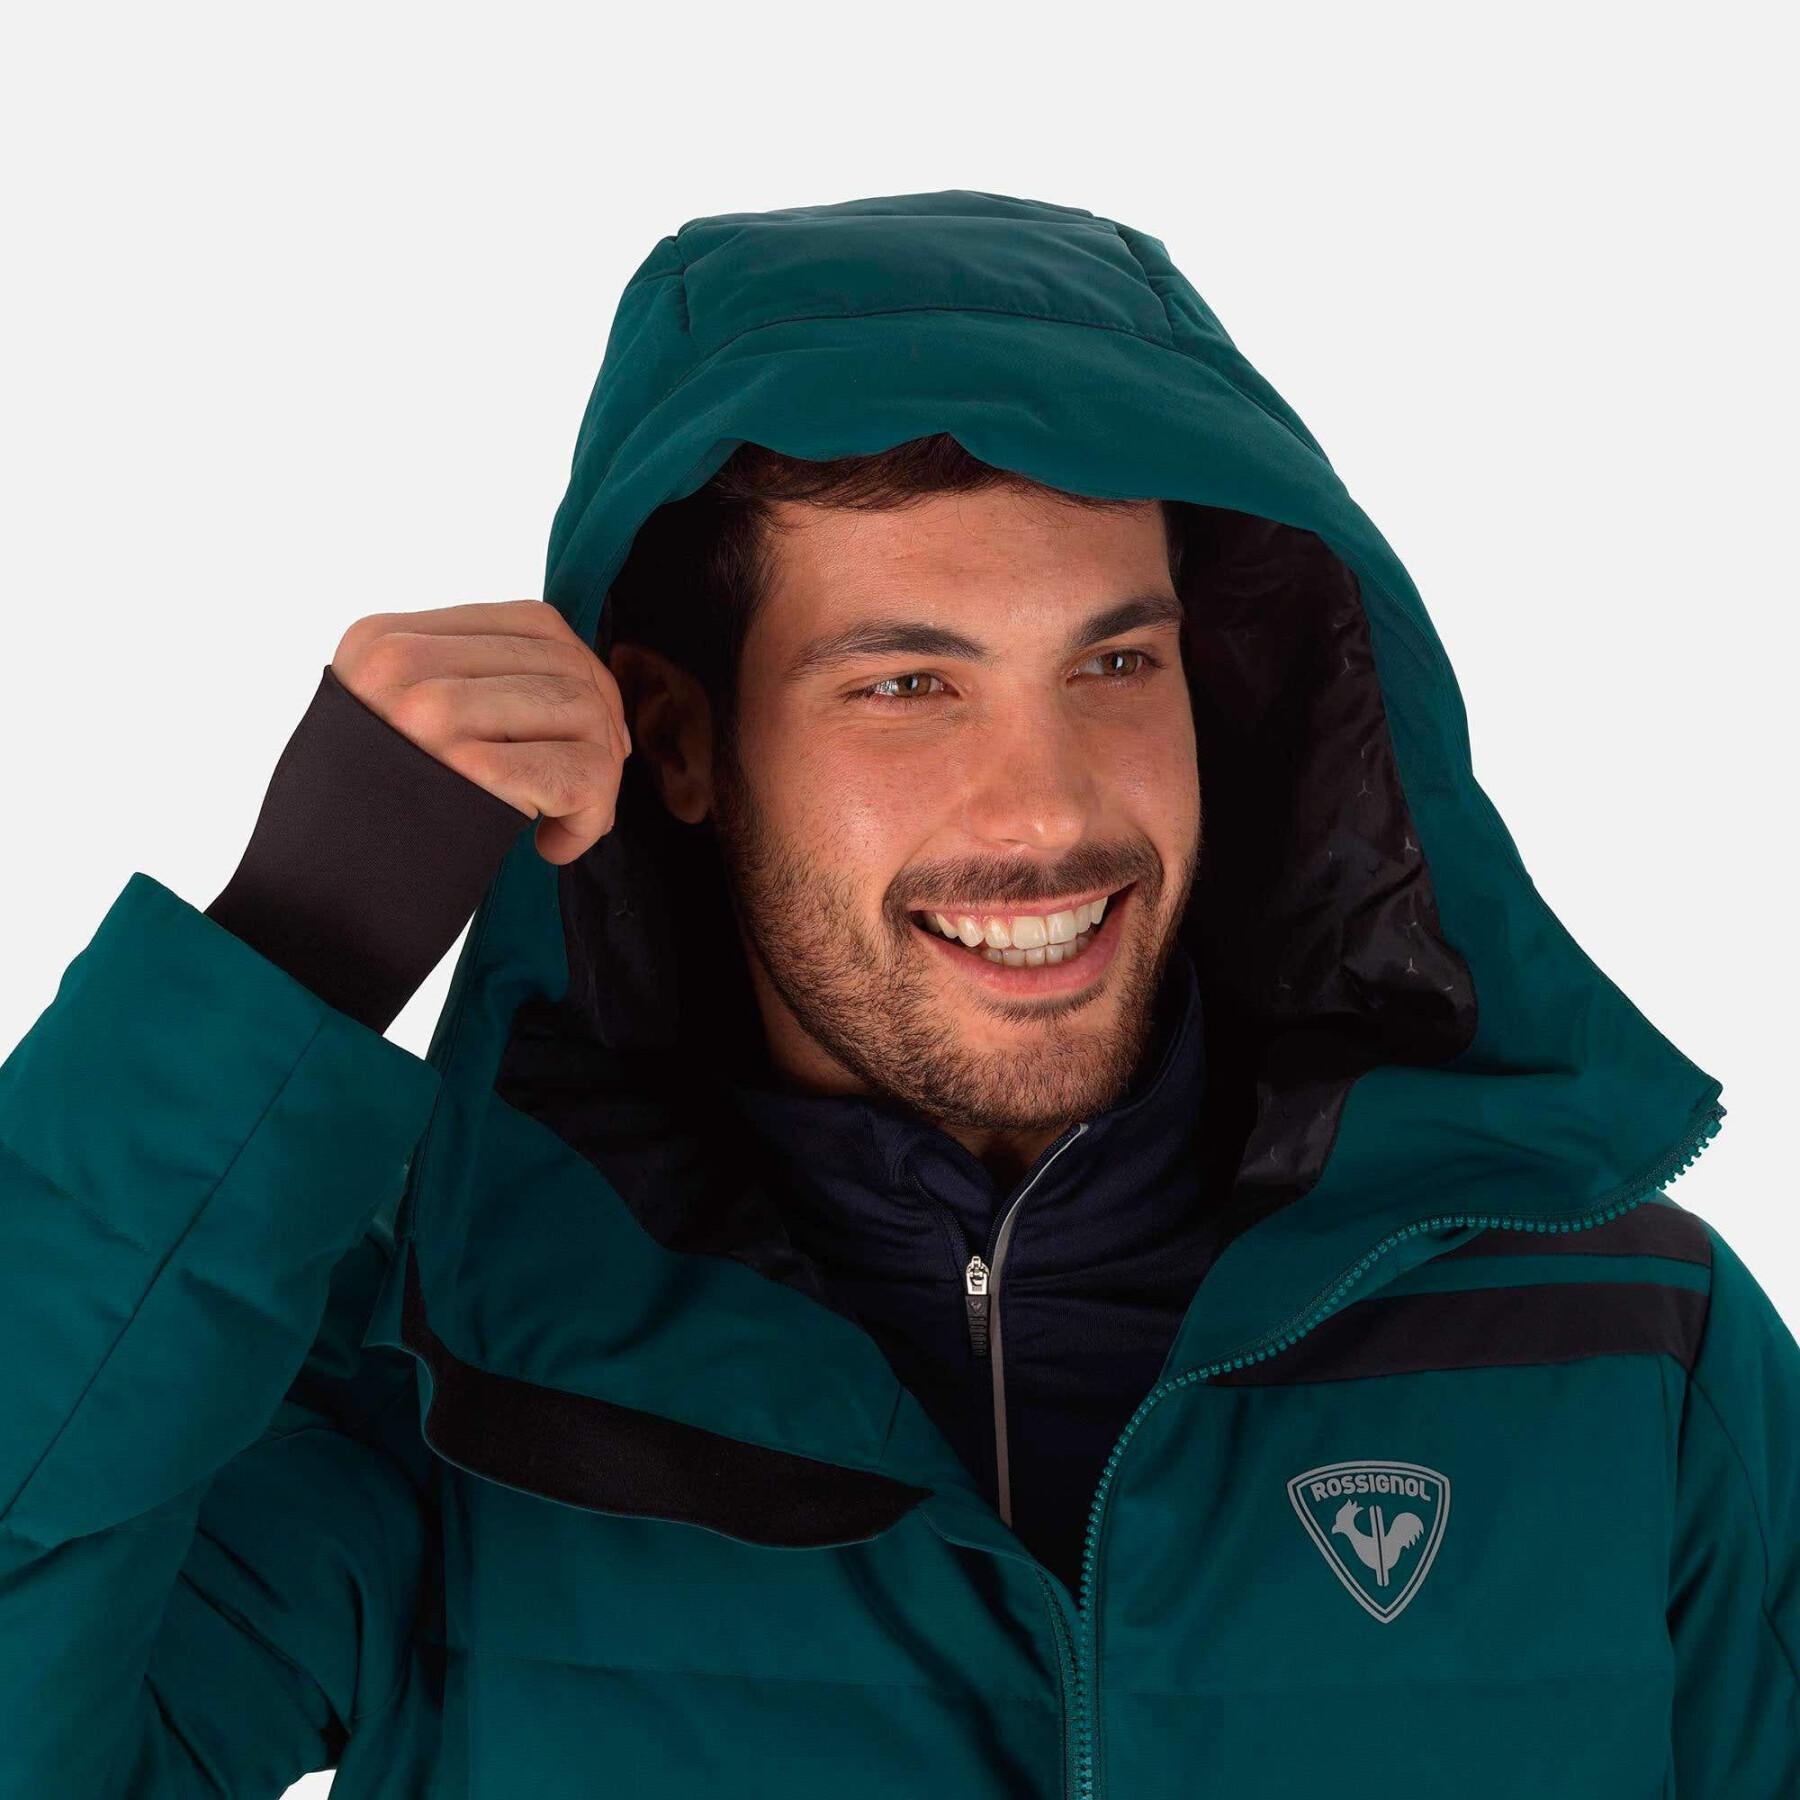 Ski jacket Rossignol Rapide